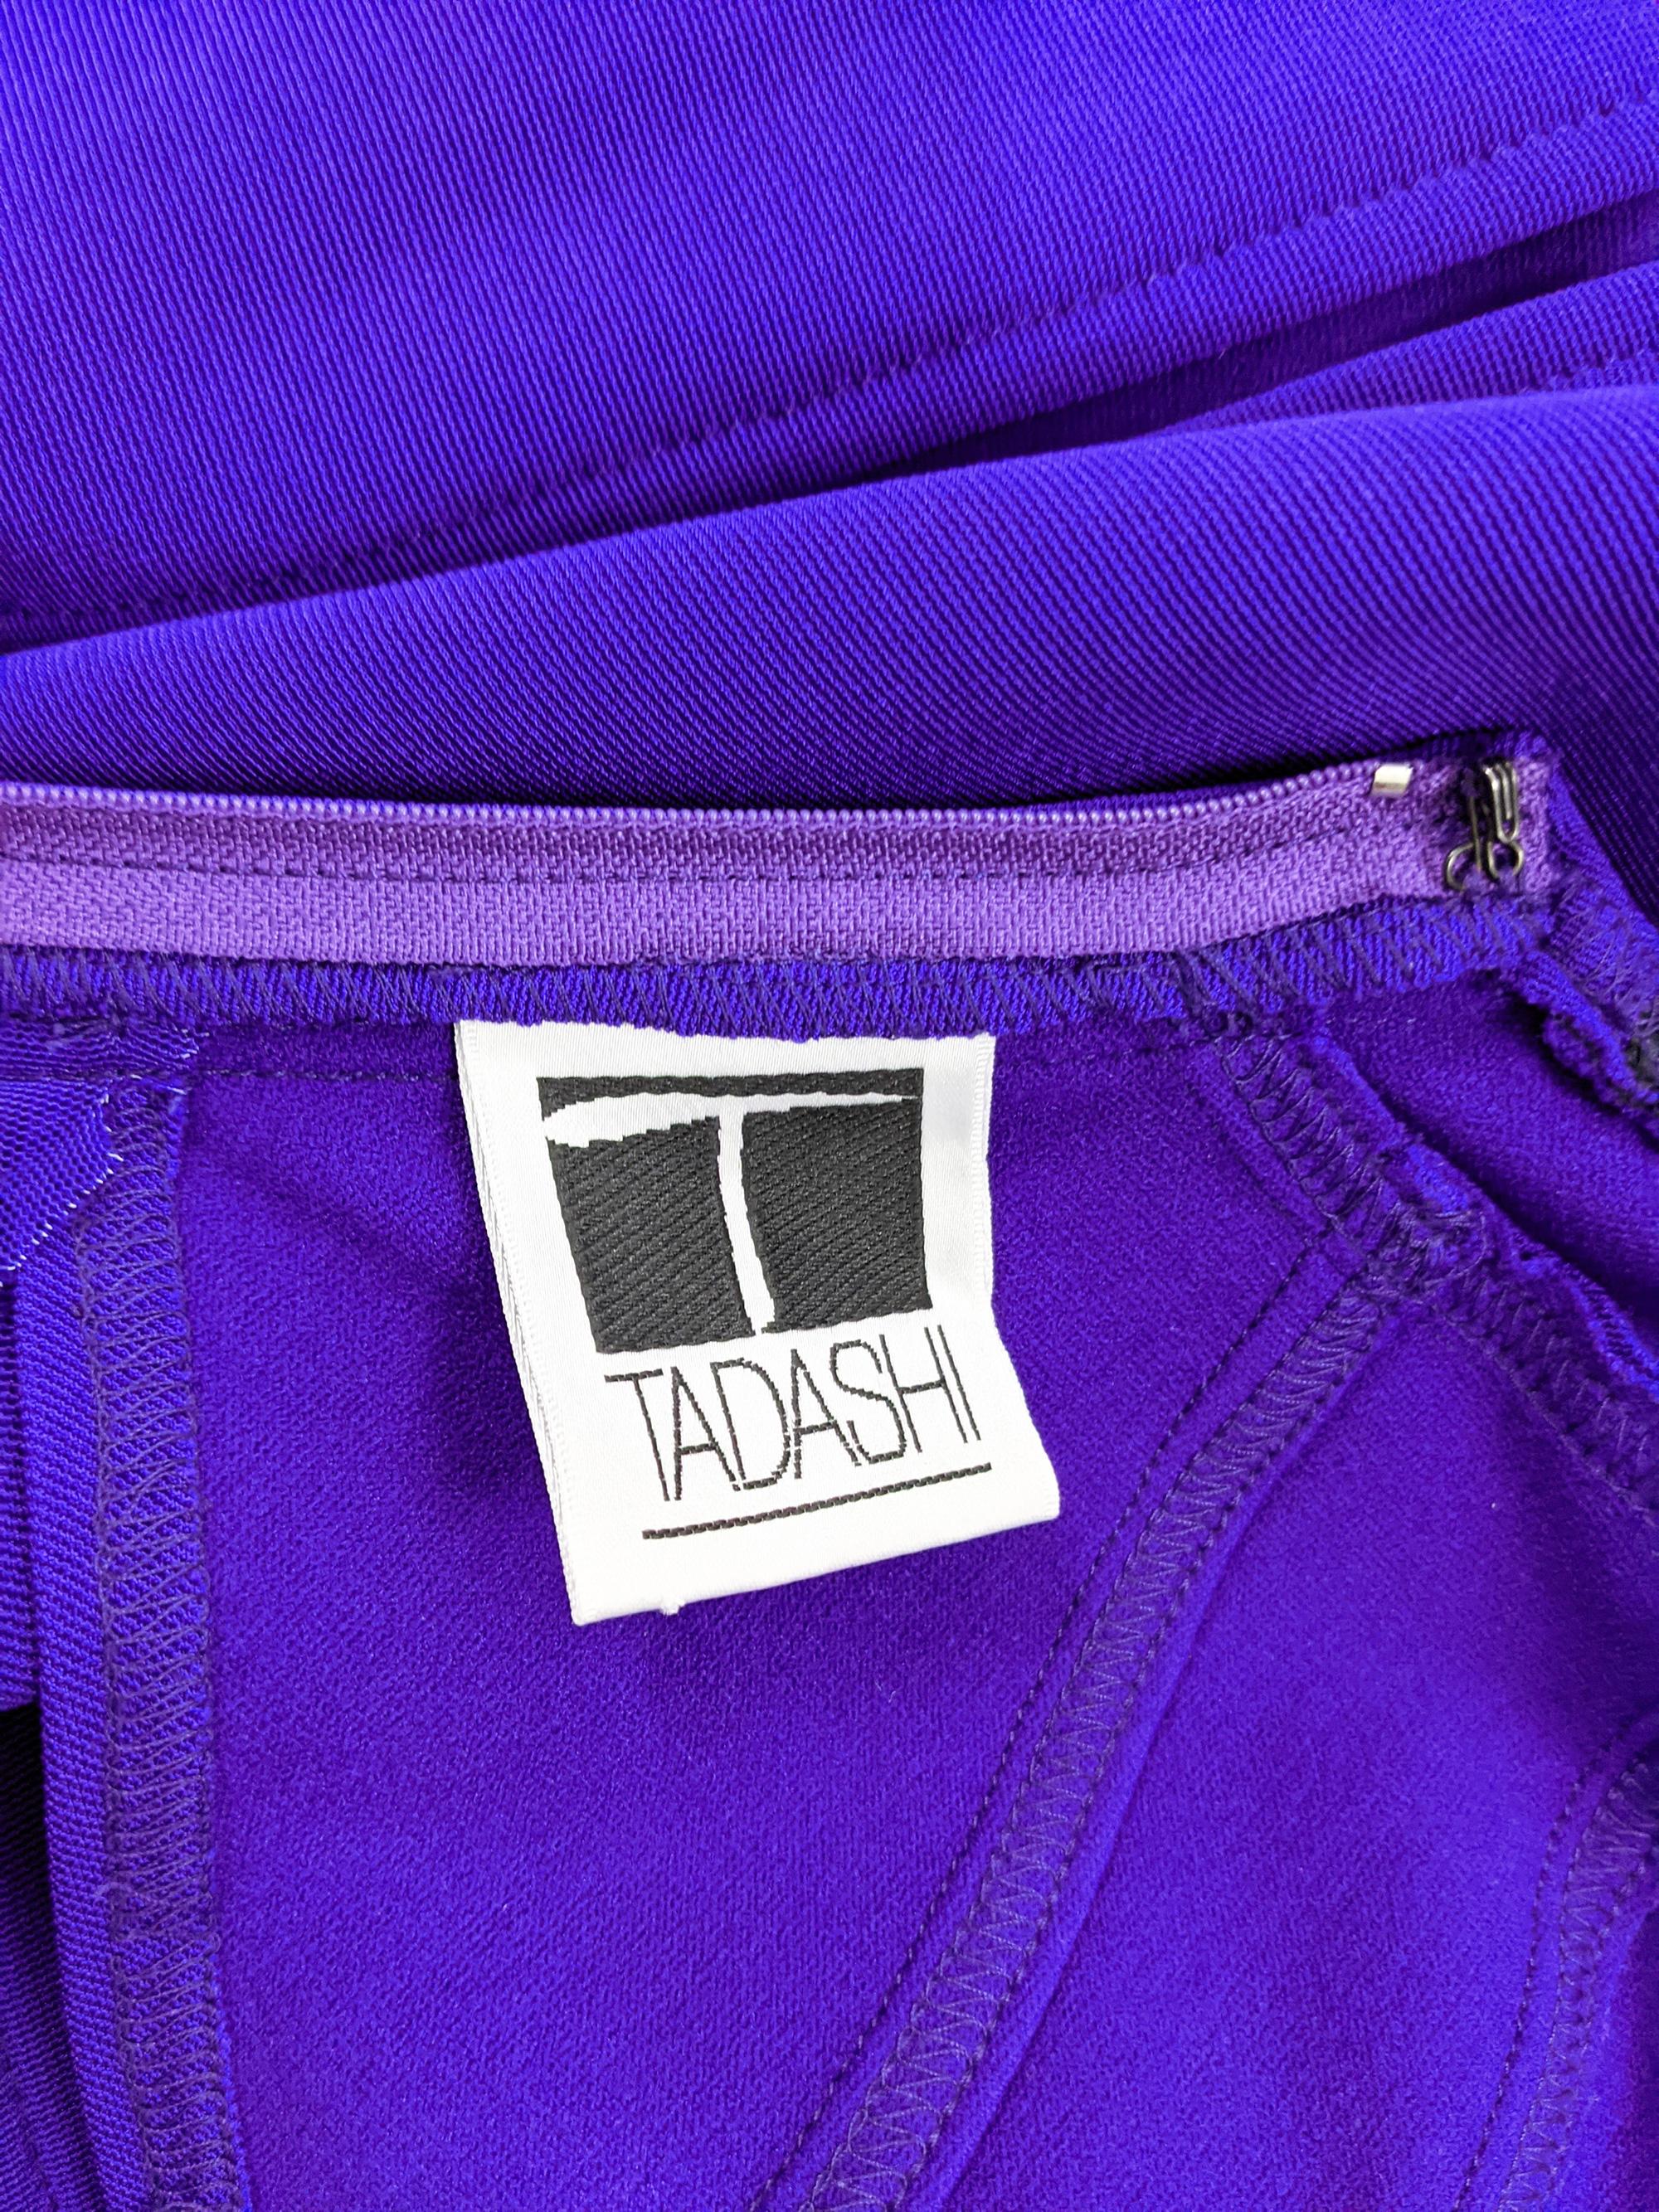 Tadashi Shoji Vintage Purple Stretch Sheer Cut Out Mesh Evening Dress, 1990s For Sale 4